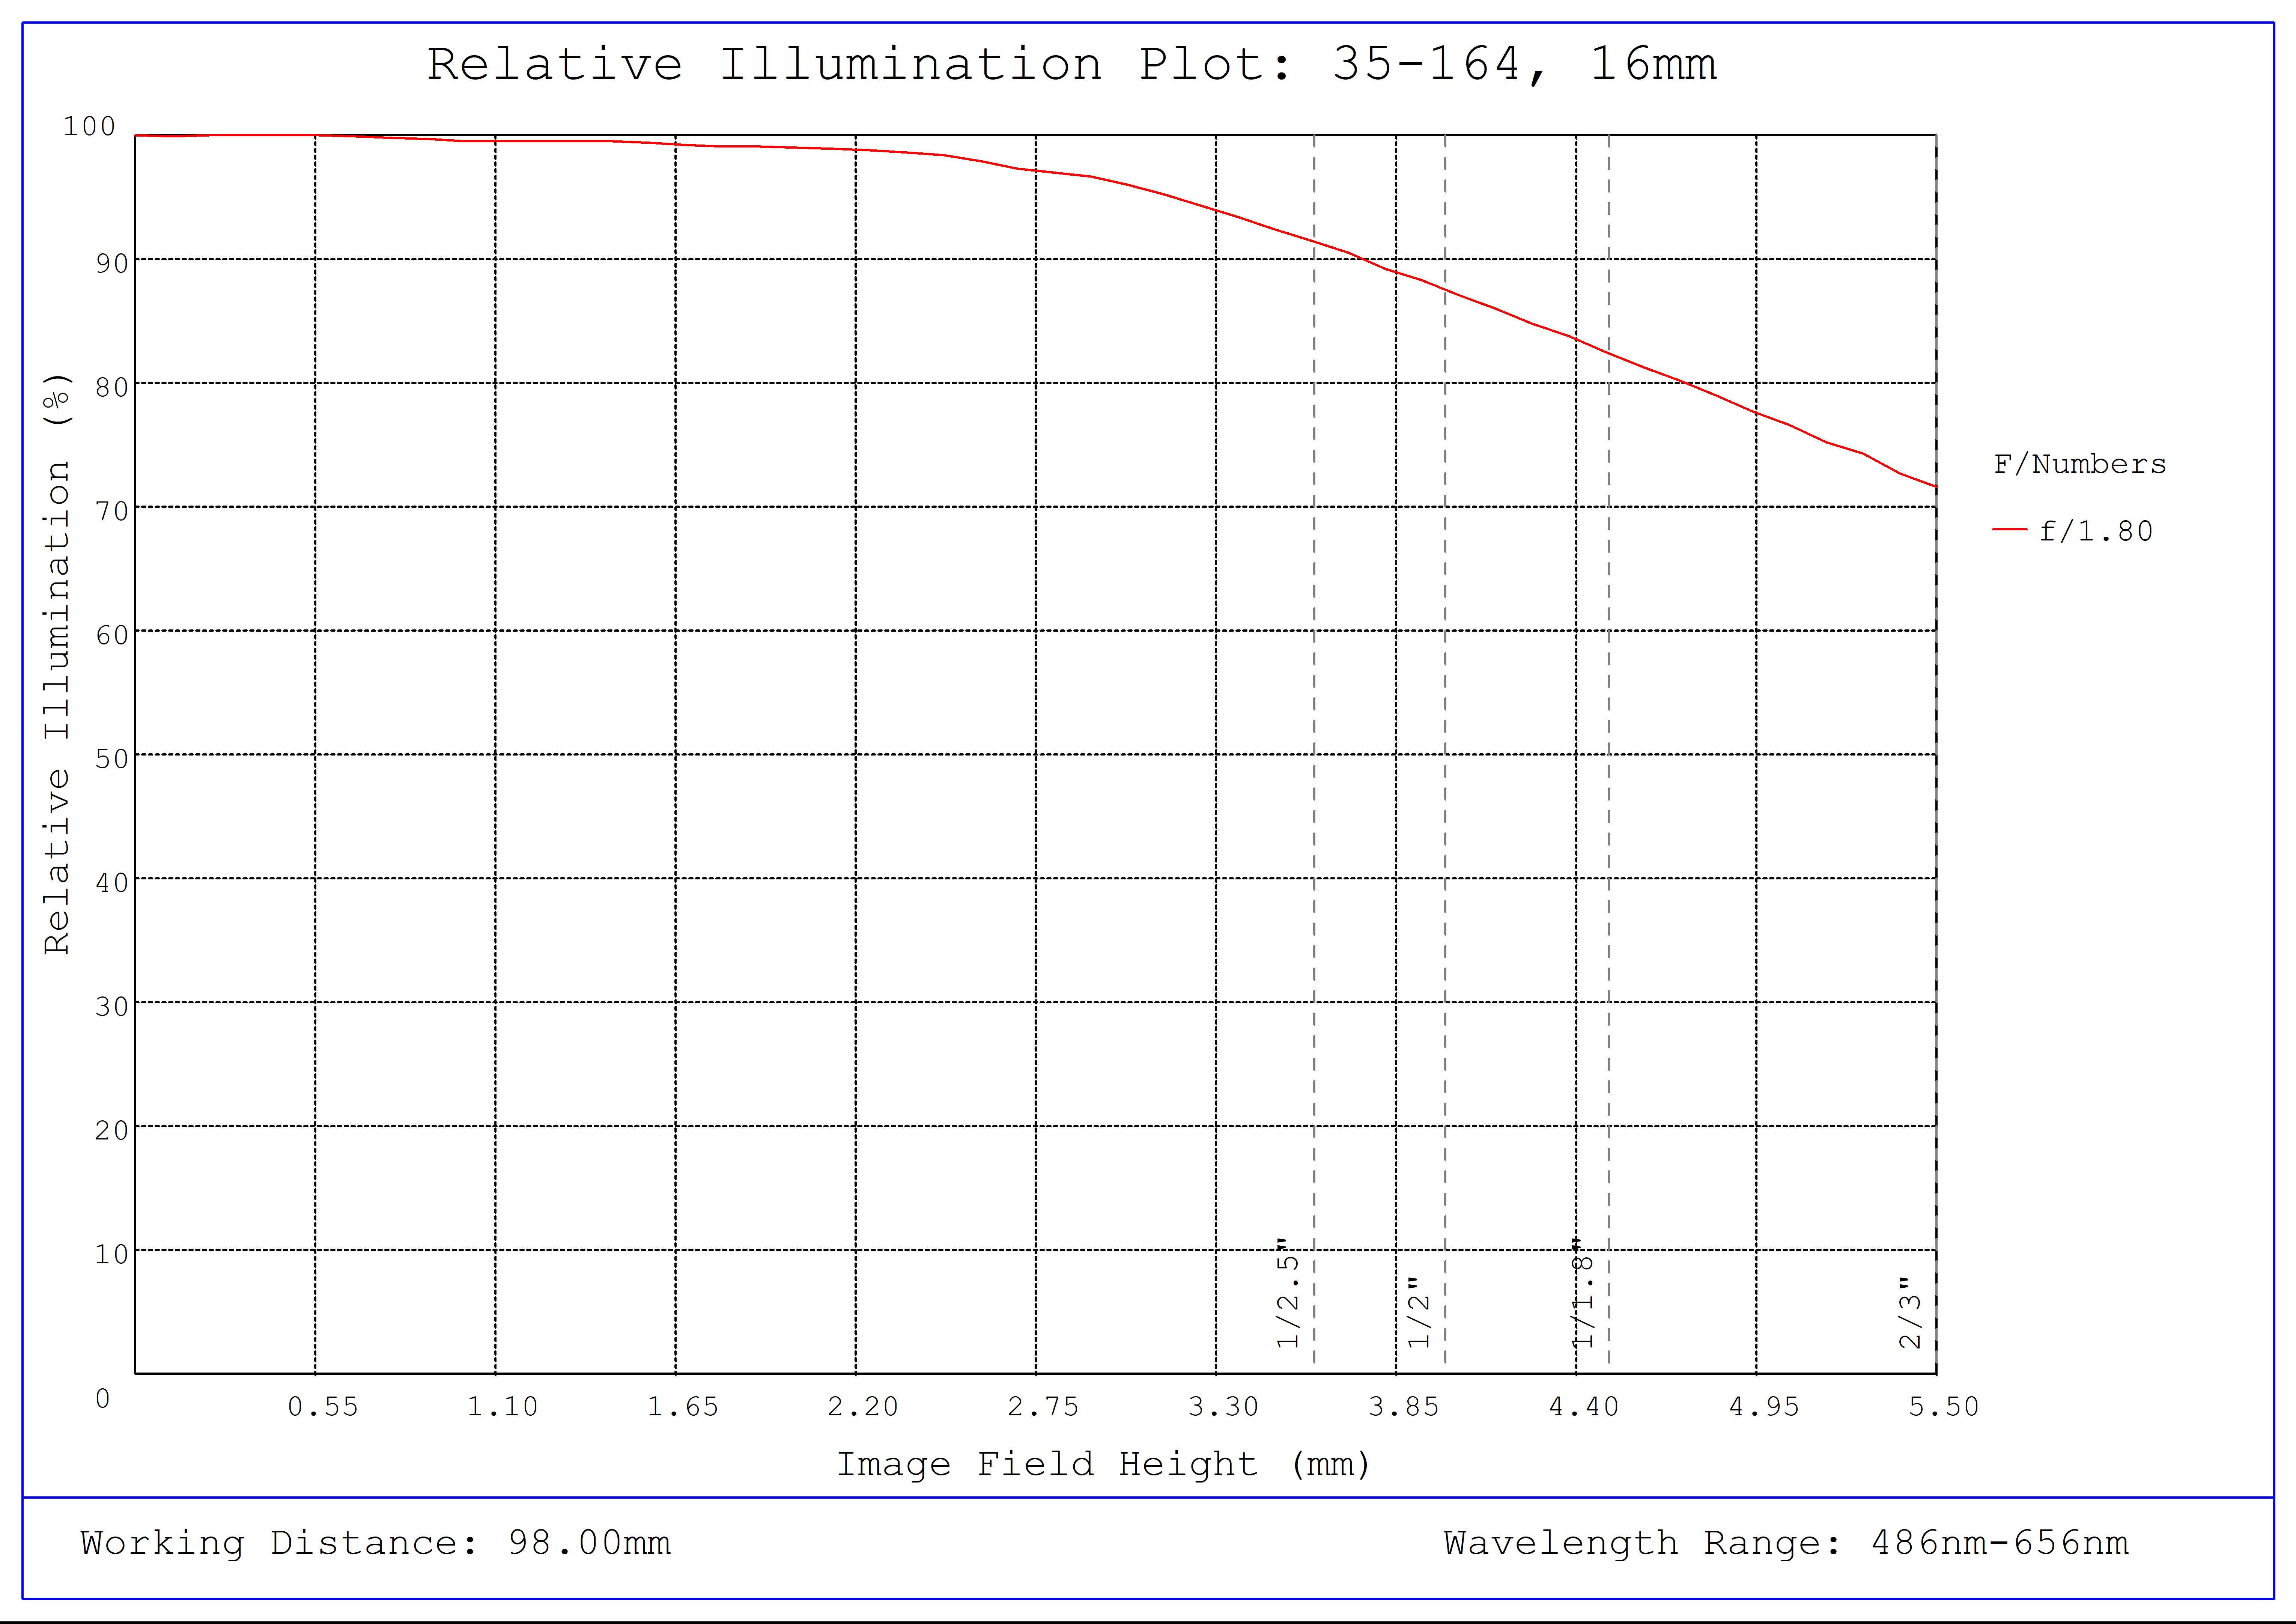 #35-164, 16mm, f/1.8 Cr Series Fixed Focal Length Lens, Relative Illumination Plot